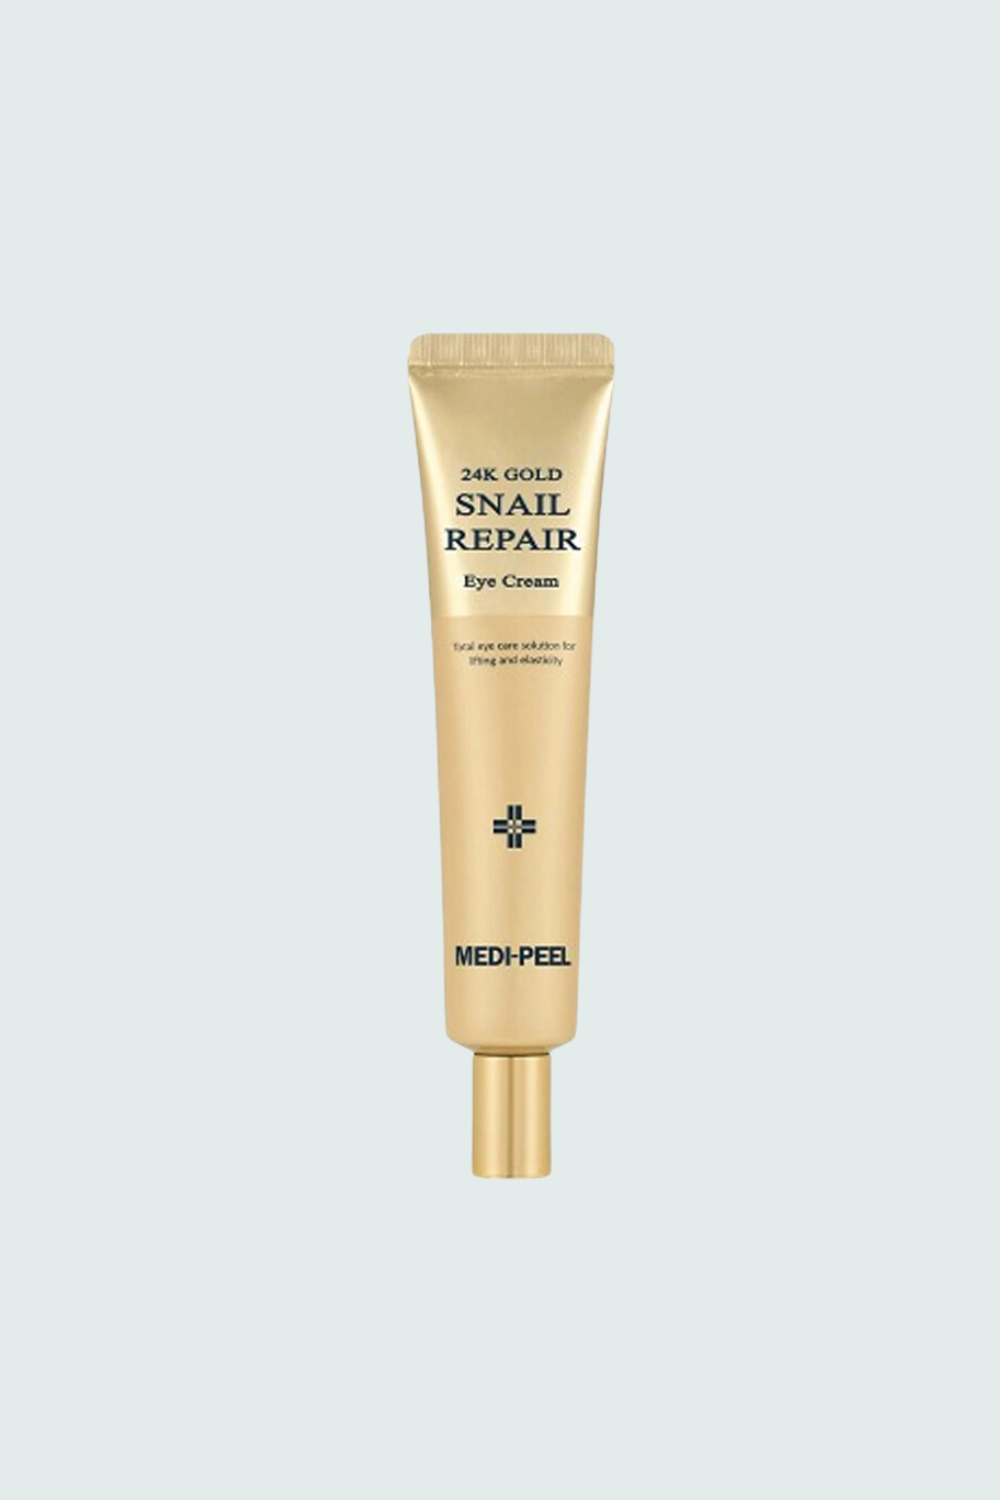 24k Gold Snail Repair Eye Cream 40ml MEDI-PEEL